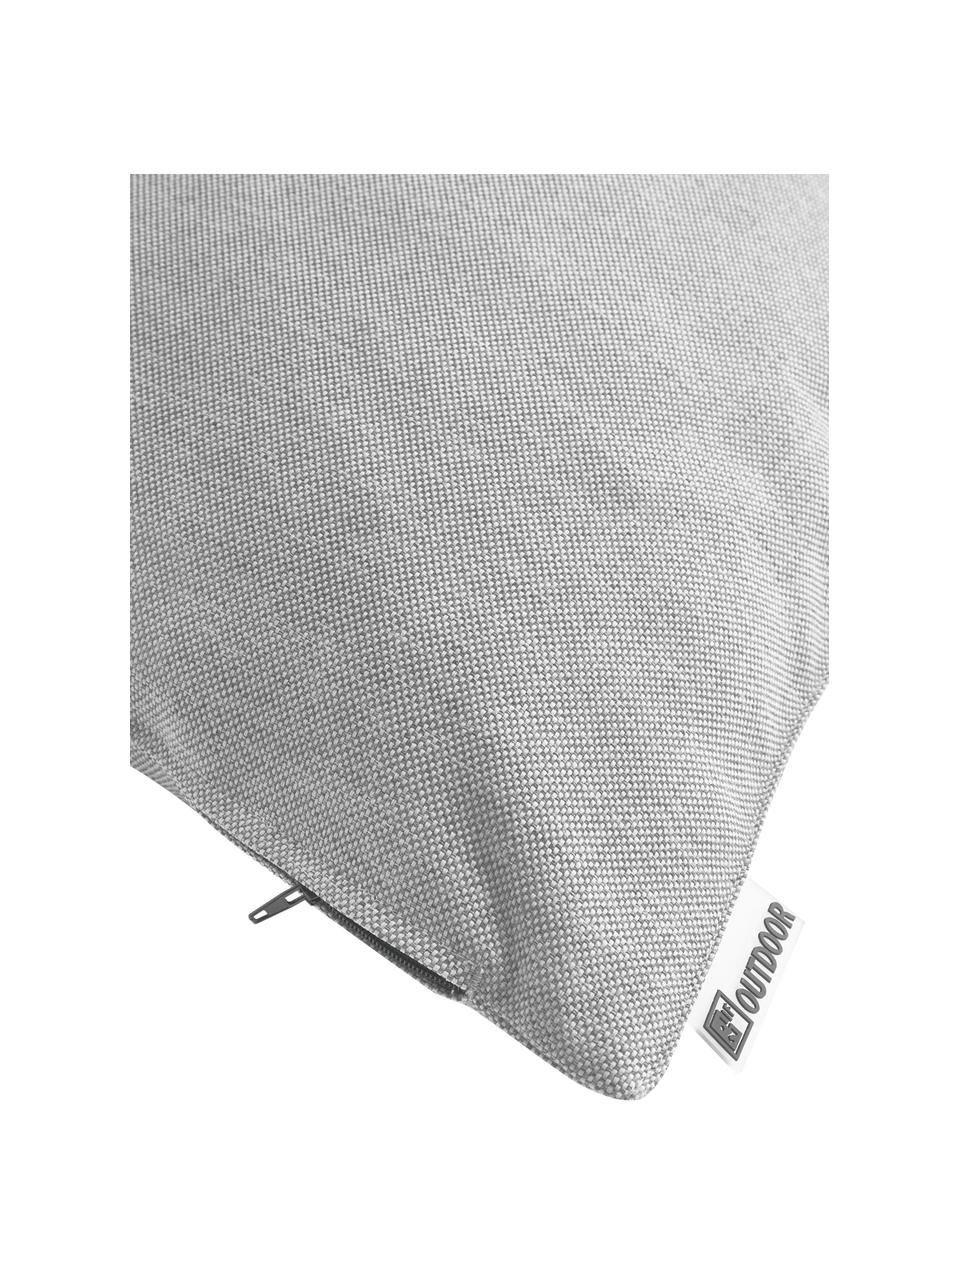 Cuscino da esterno grigio Olef, 100% cotone, Grigio, Larg. 45 x Lung. 45 cm